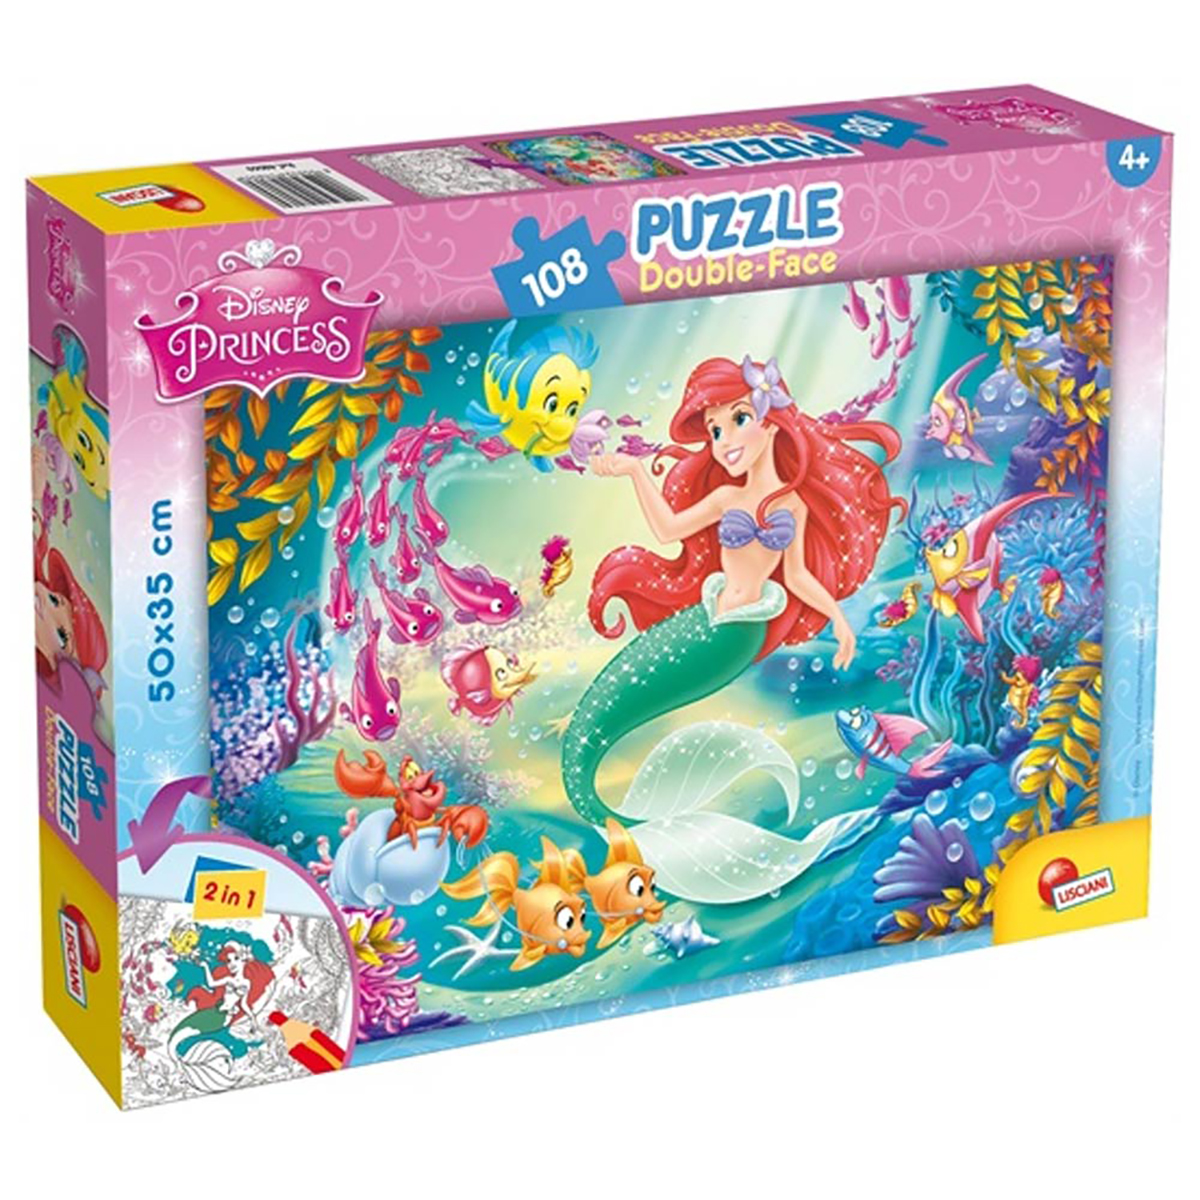 Arielle von Meerjungfrau (50x35cm) NOON die Teile, Puzzle 108 Ausmal-Puzzle Lisciani